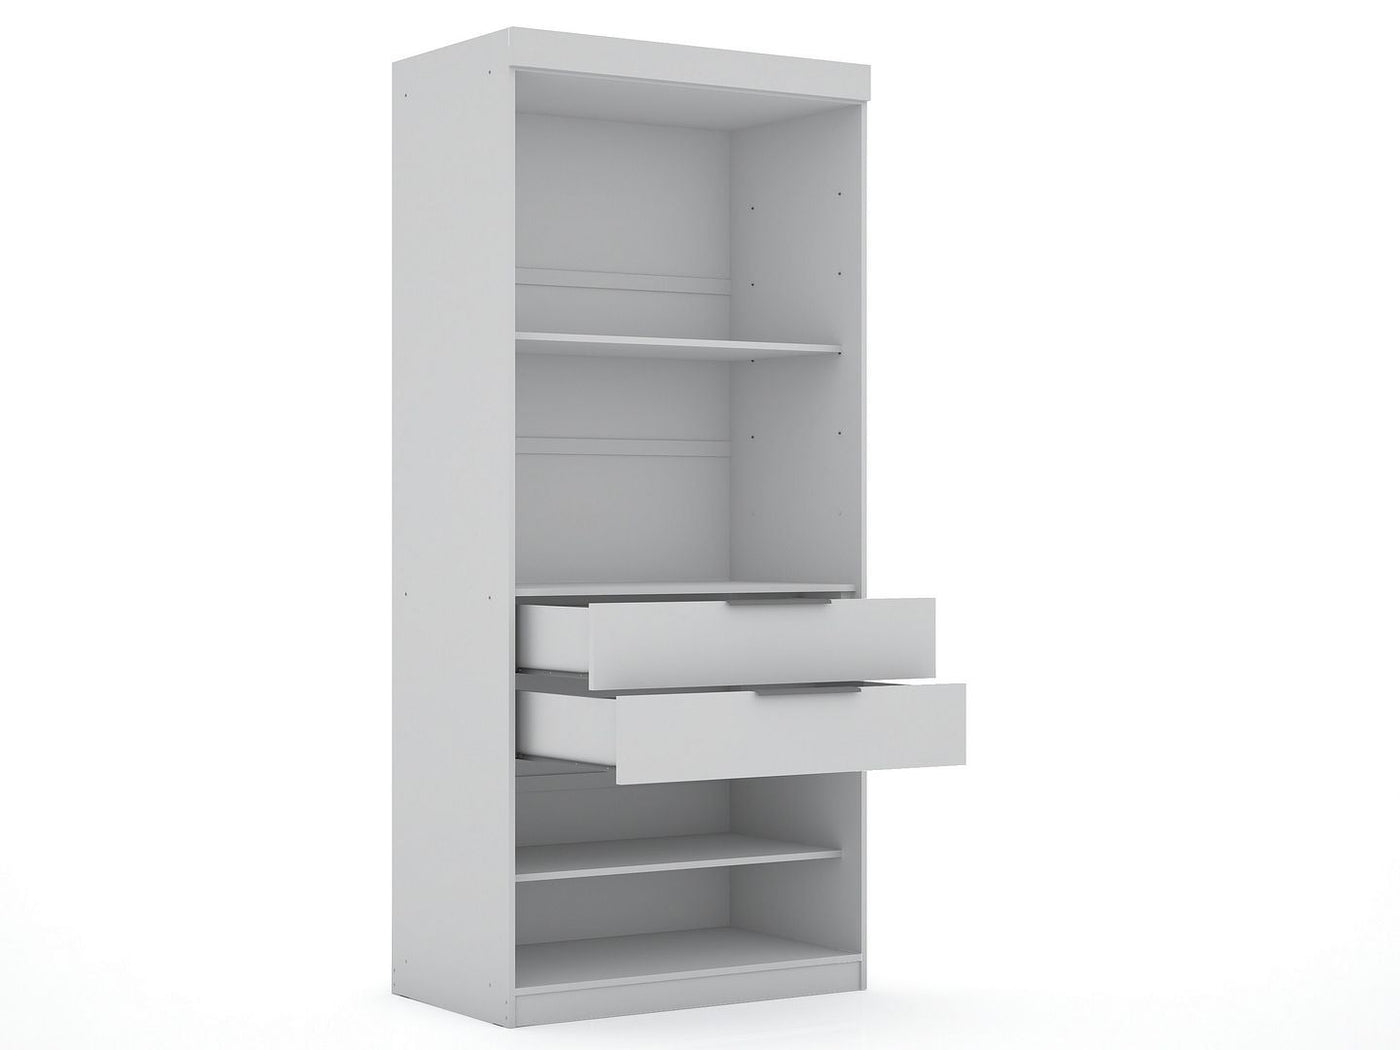 Oulu 2-Piece Modular Corner Wardrobe - White